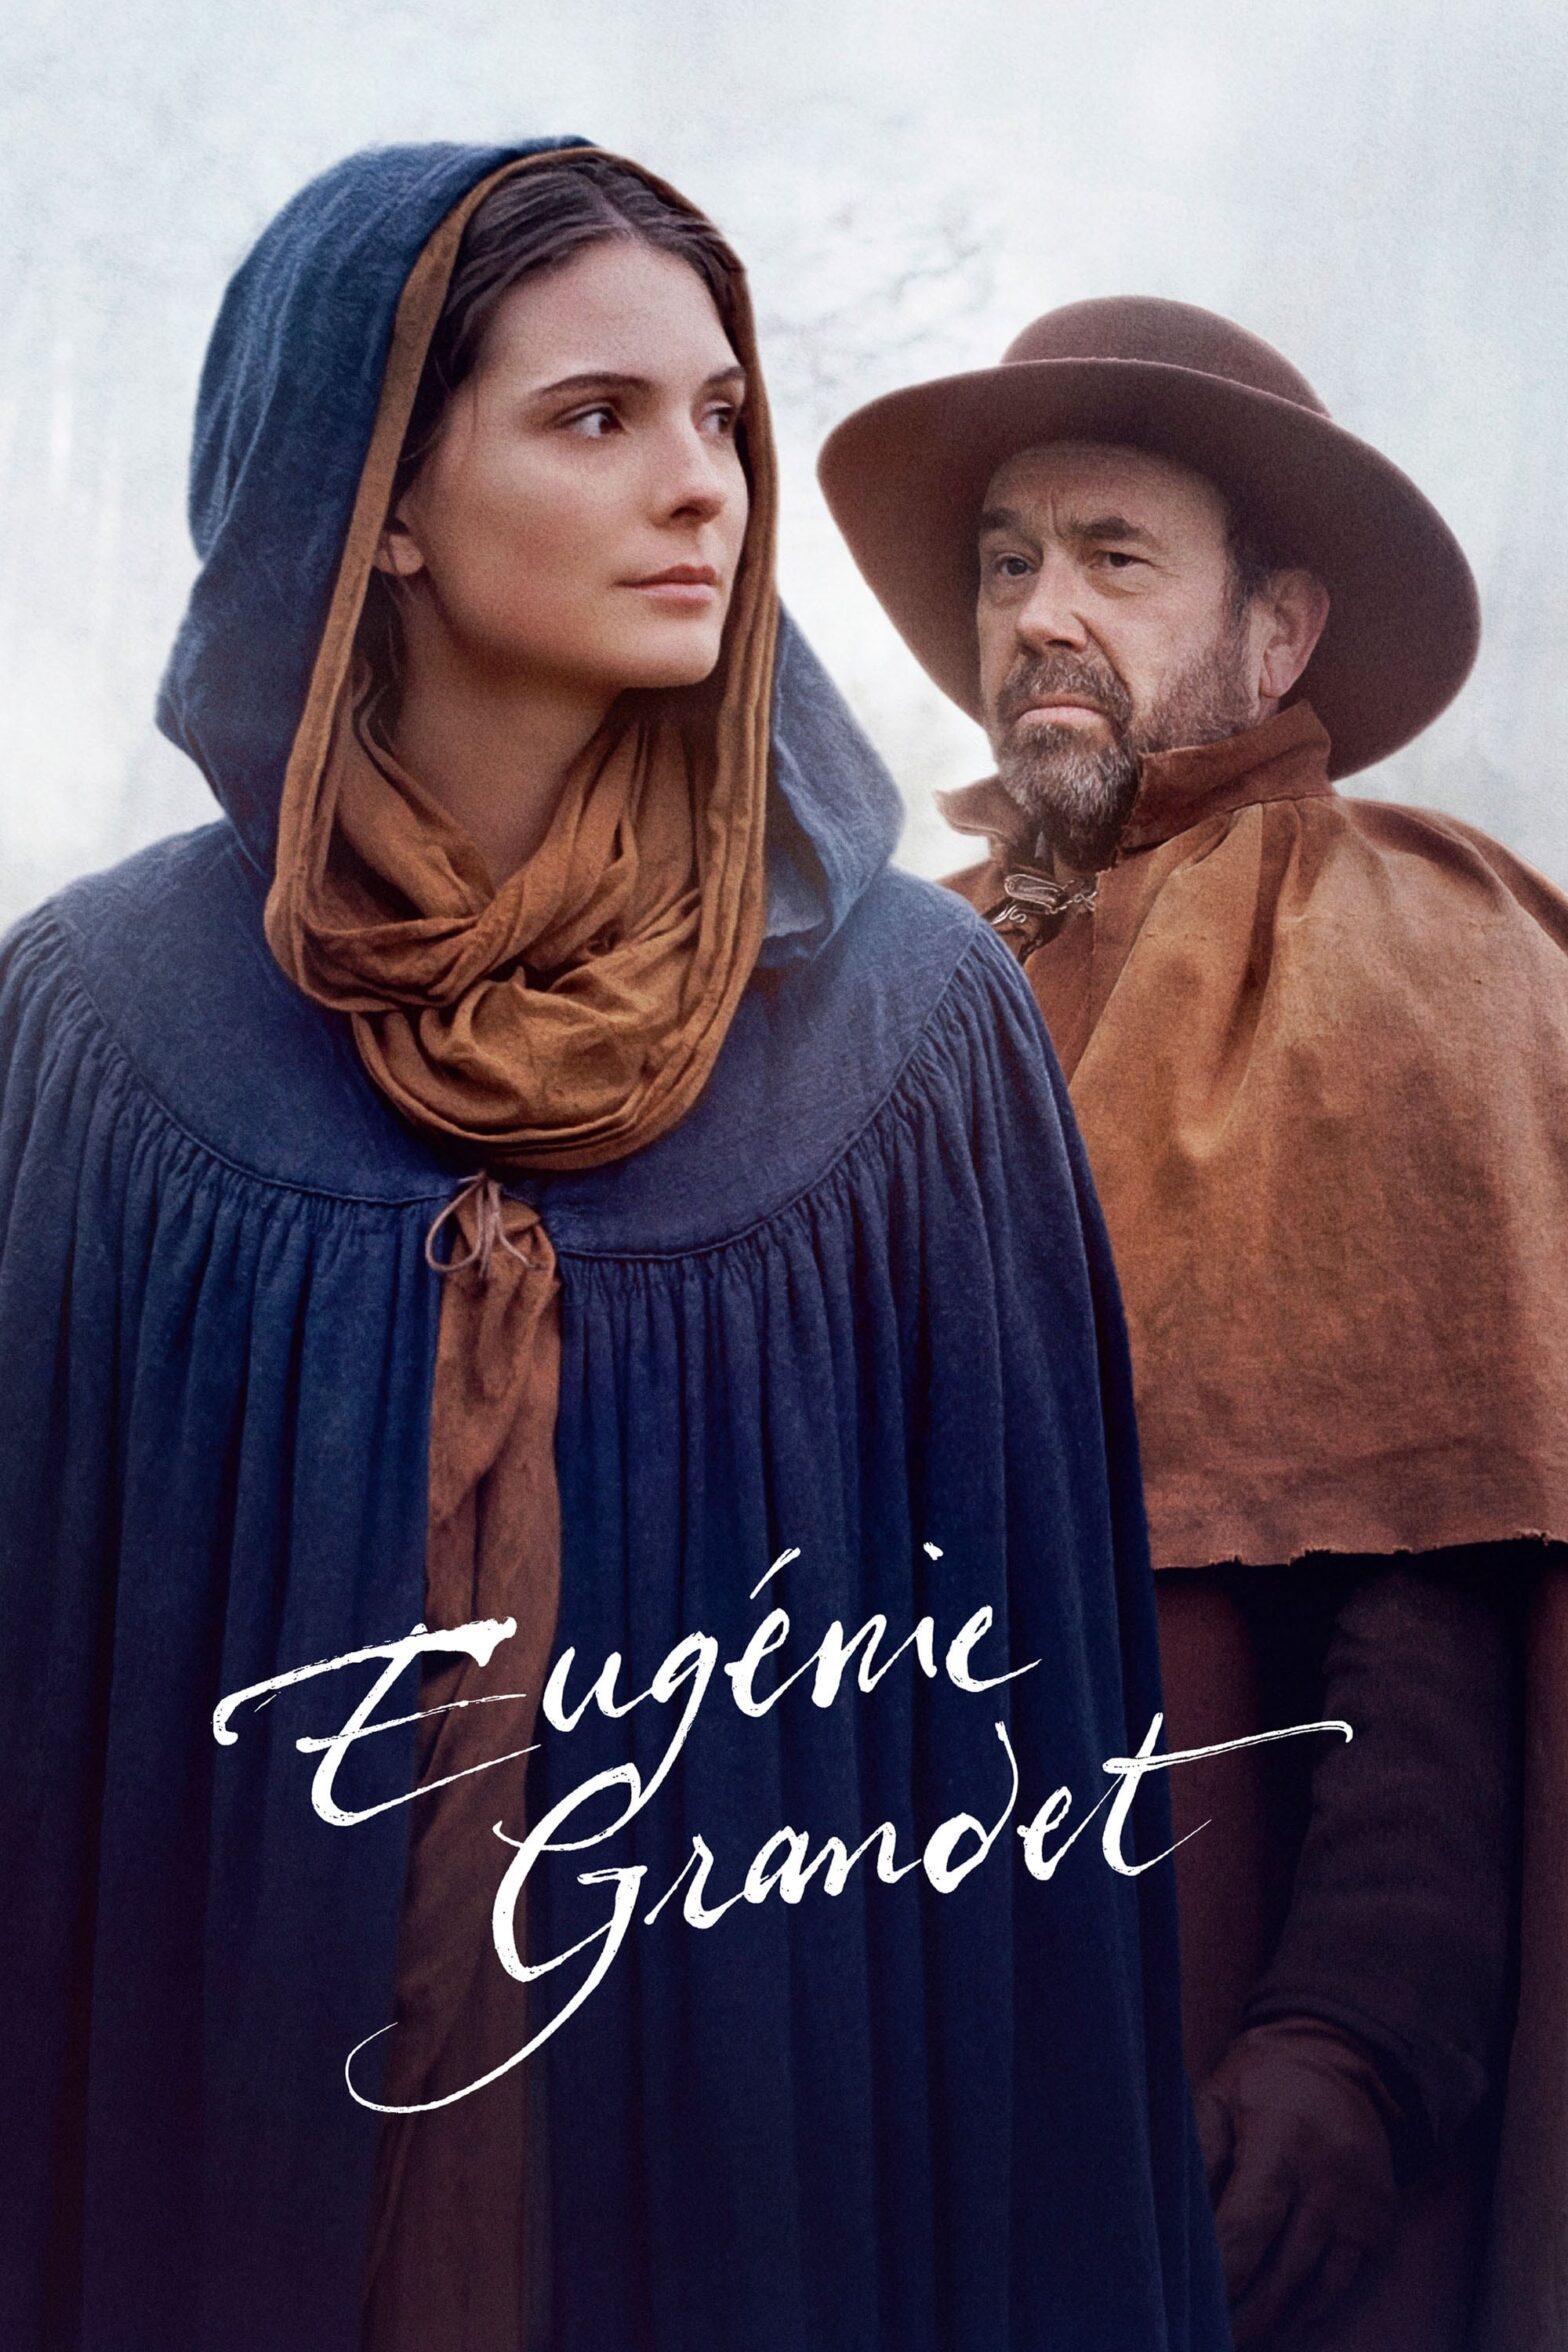 Poster for the movie "Eugénie Grandet"